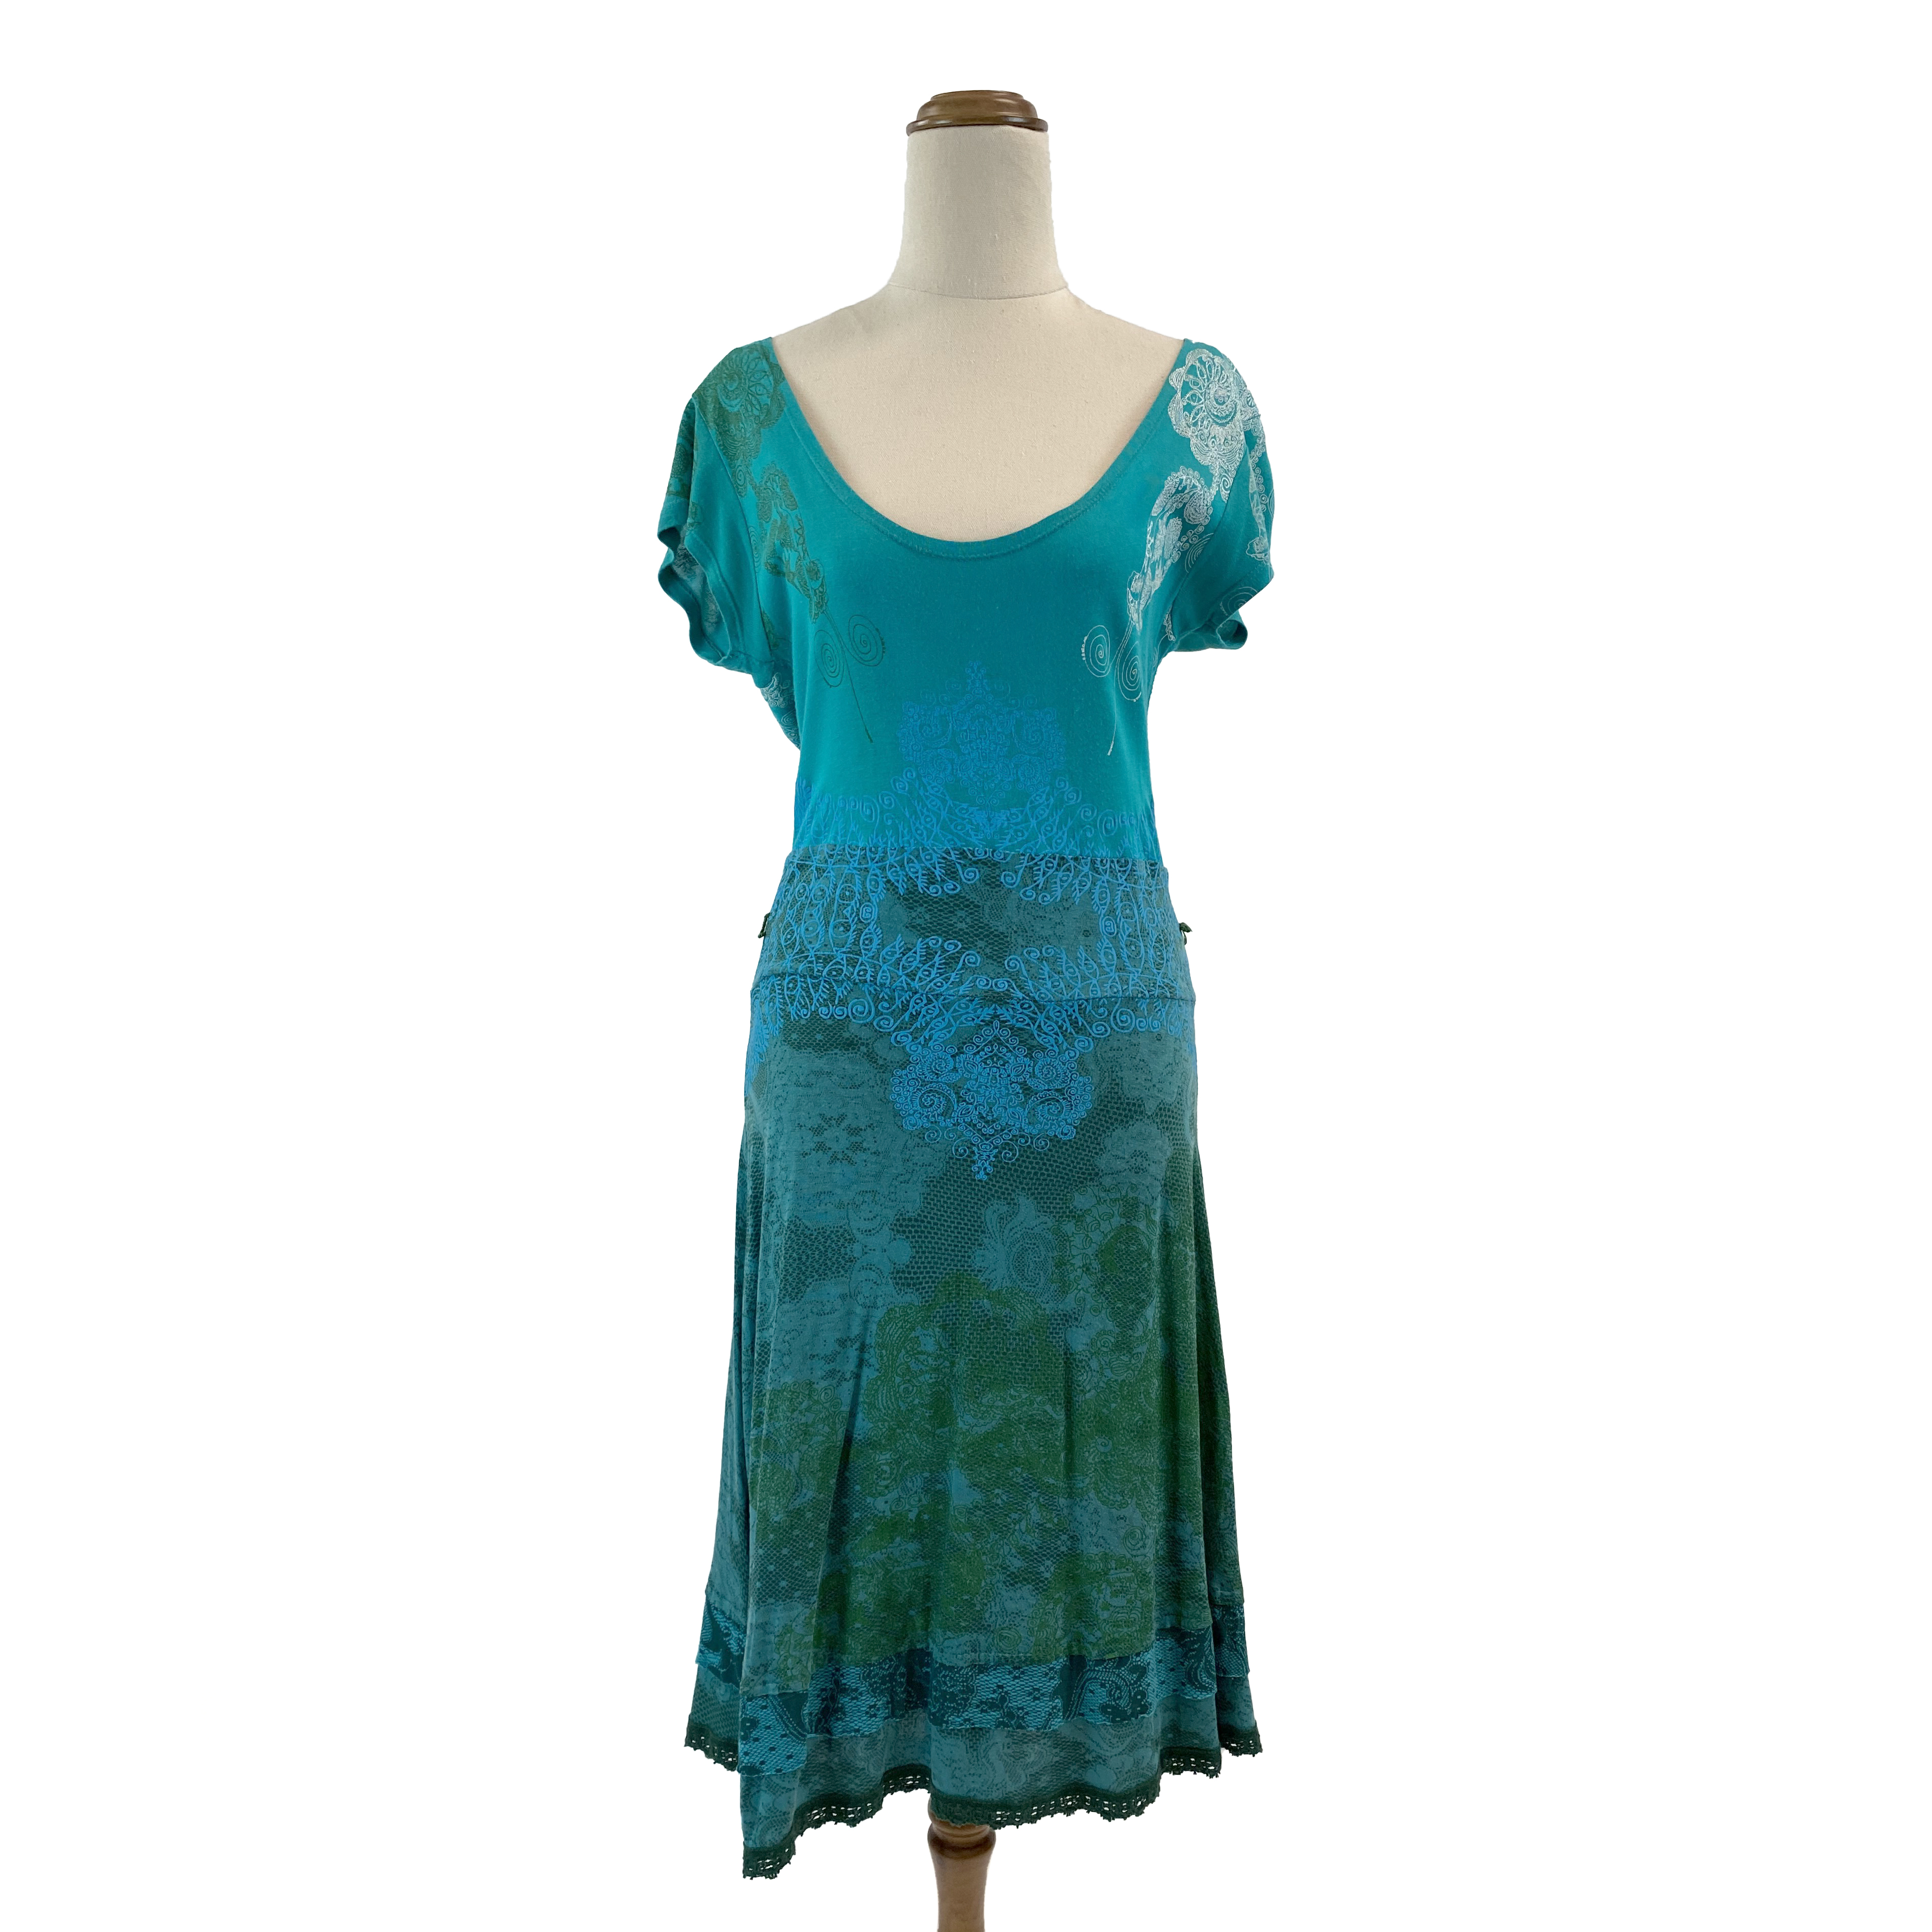 Desigual Teal/Blue Dress